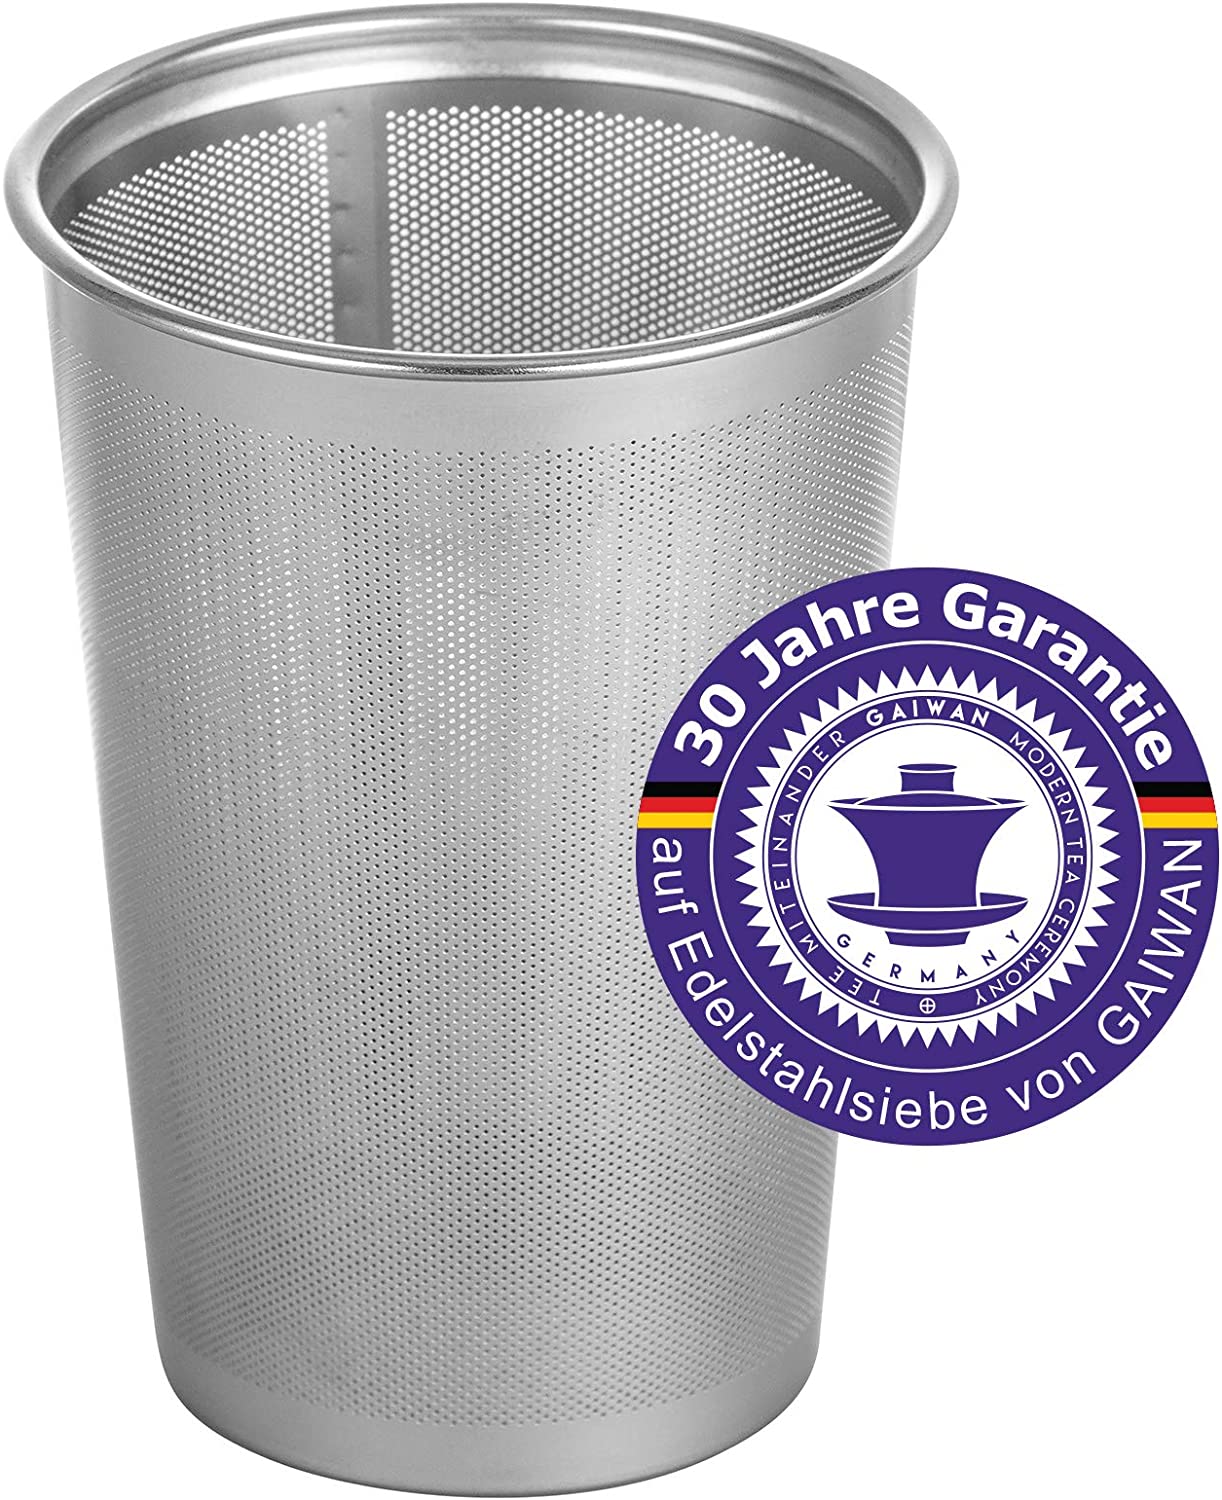 GAIWAN SP500 - Loose Leaf Tea Filter - Fine Stainless Steel Infuser - Permanent Filter - 30 Year Warranty